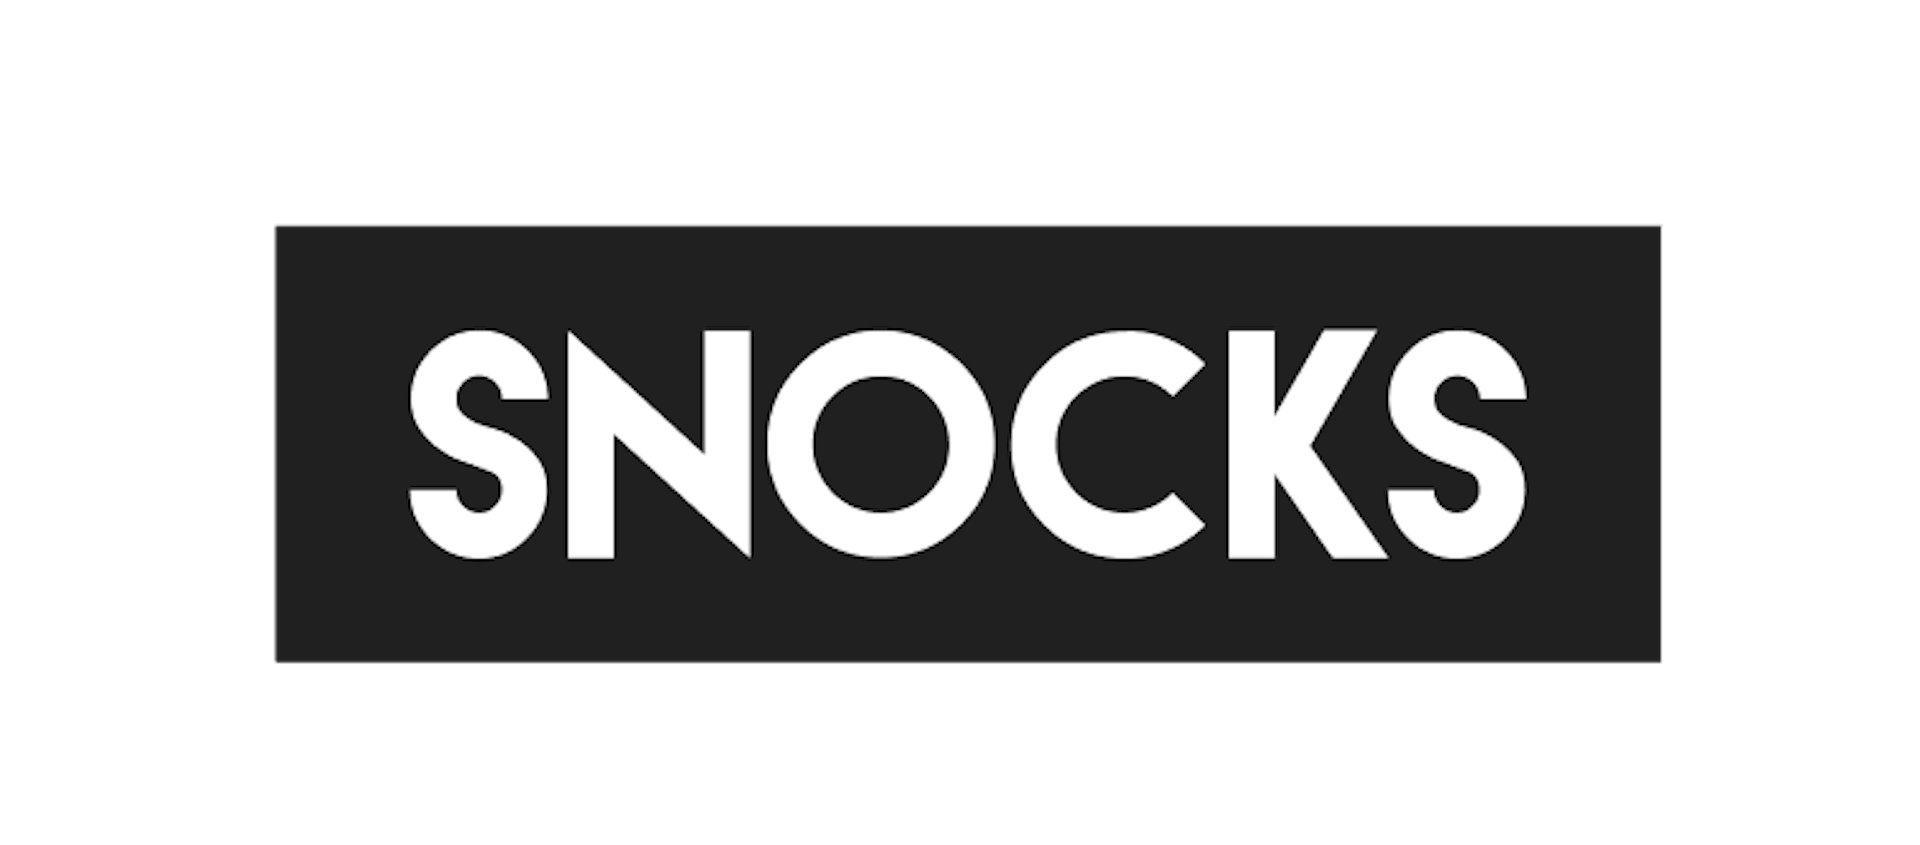 Snocks logo